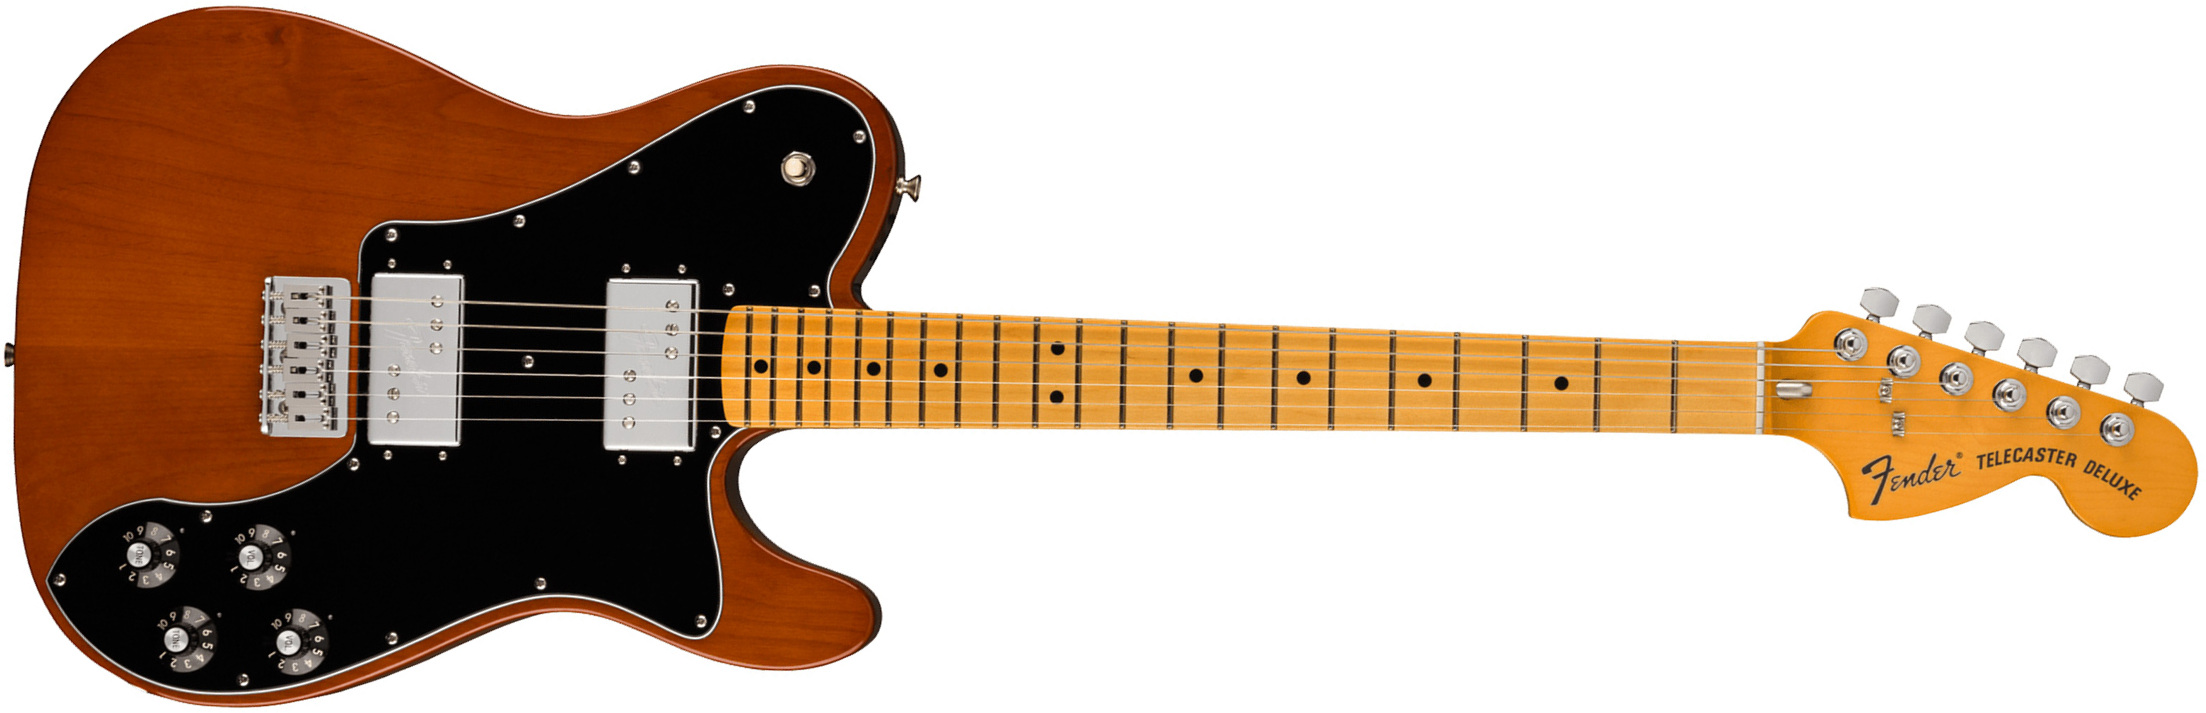 Fender Tele Deluxe 1975 American Vintage Ii Usa 2h Ht Mn - Mocha - Guitare Électrique Forme Tel - Main picture